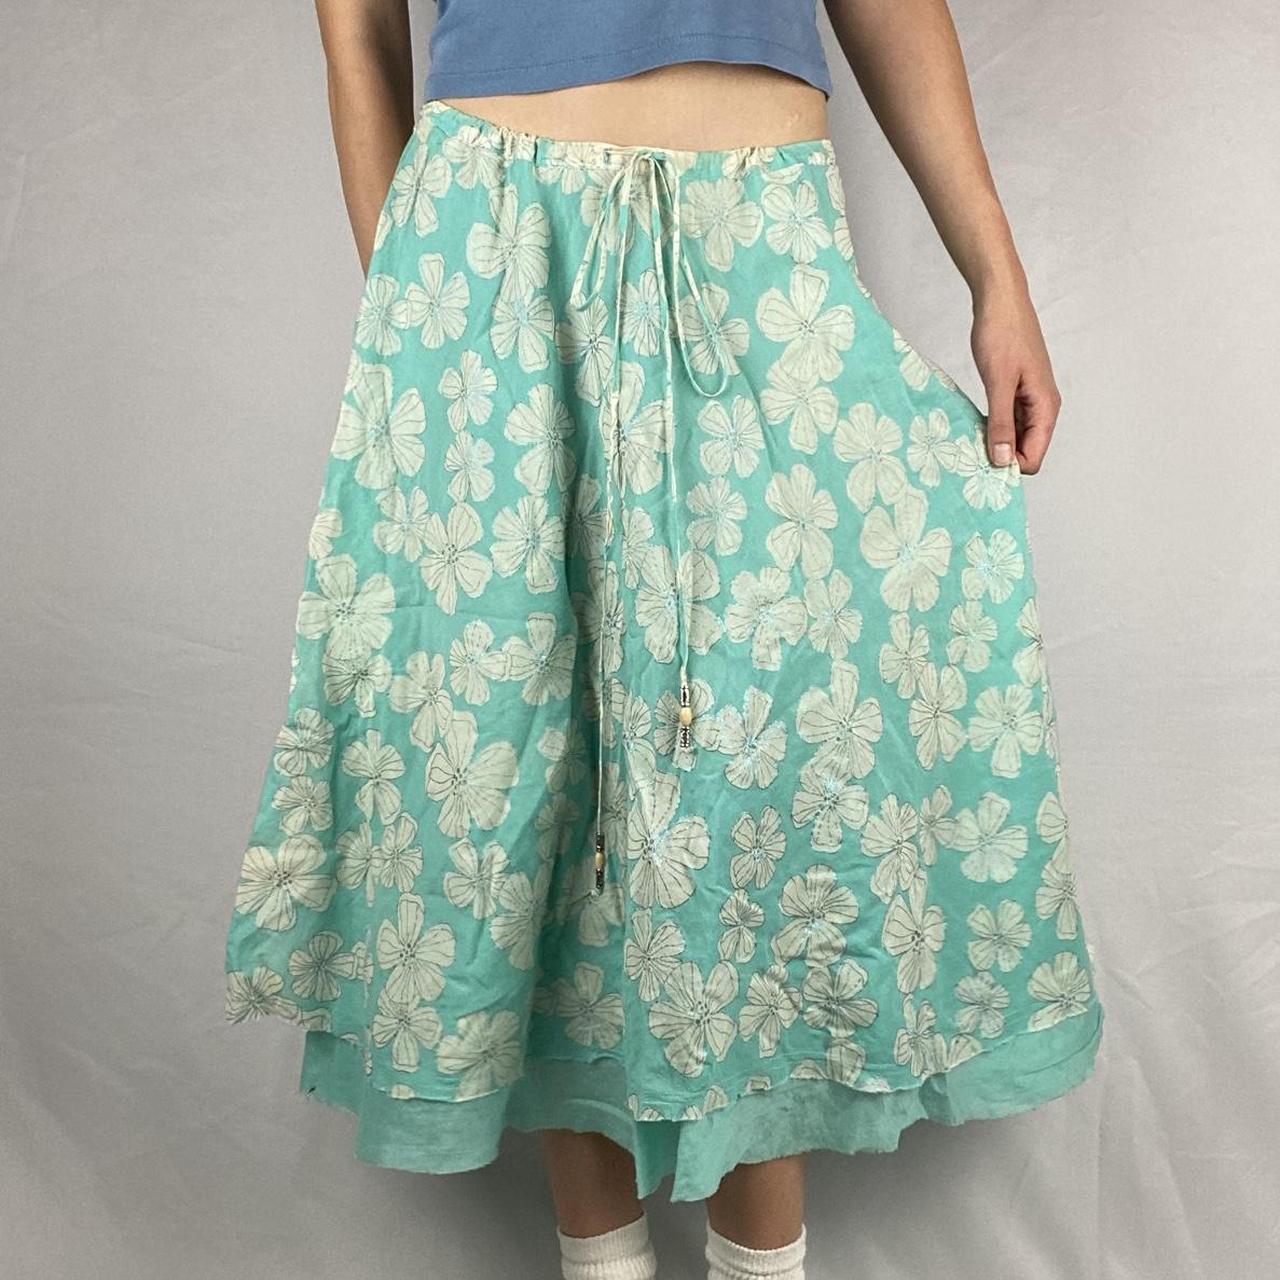 Joie Women's Blue and Green Skirt (3)